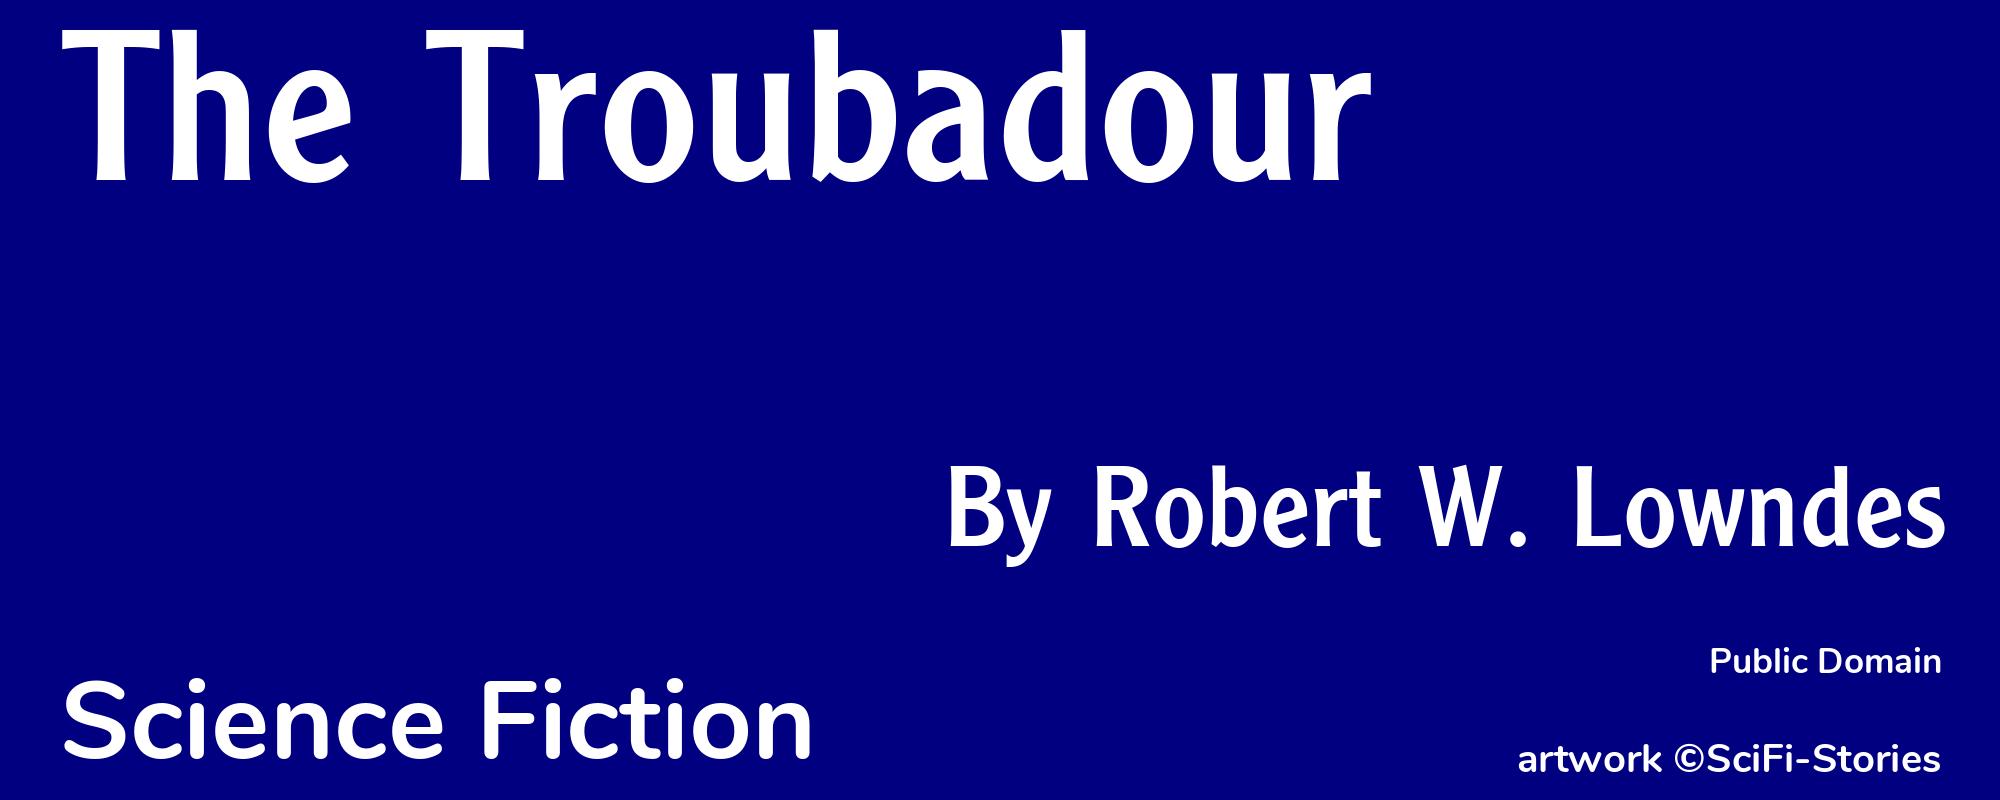 The Troubadour - Cover